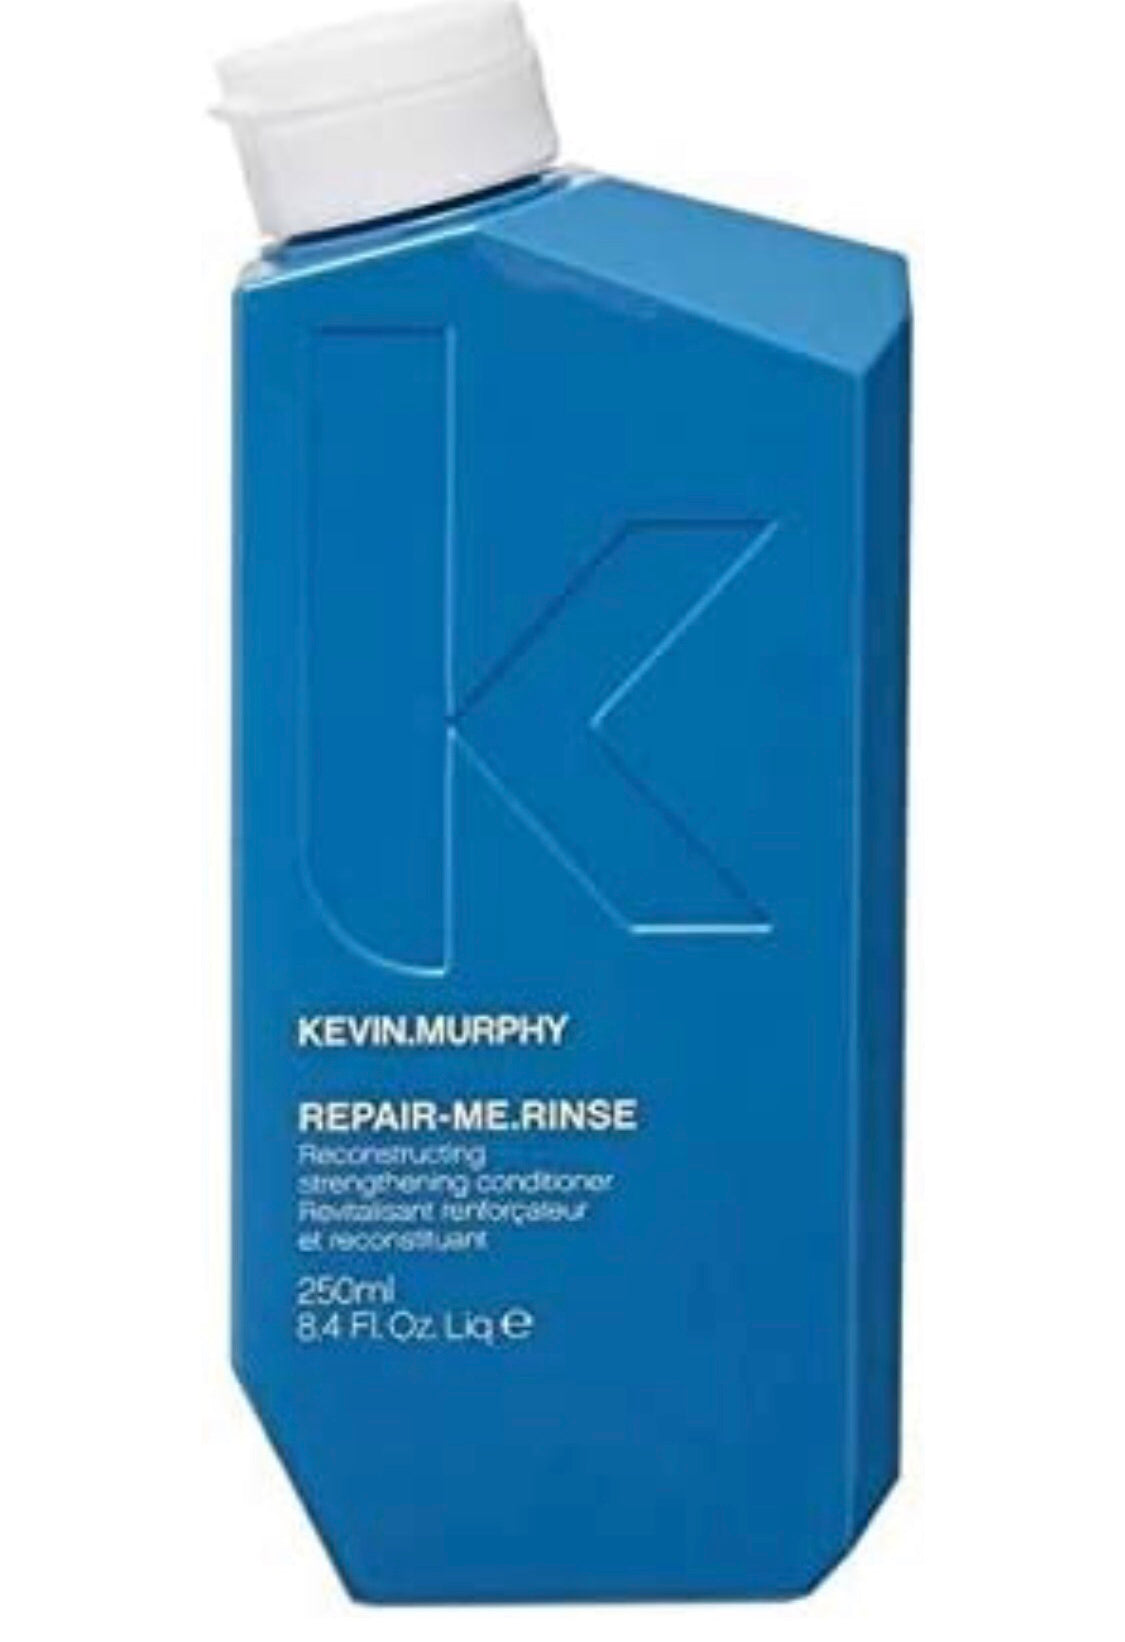 Kevin.Murphy - Repair-me.Rinse conditioner 8.4 fl. oz. / 250 ml